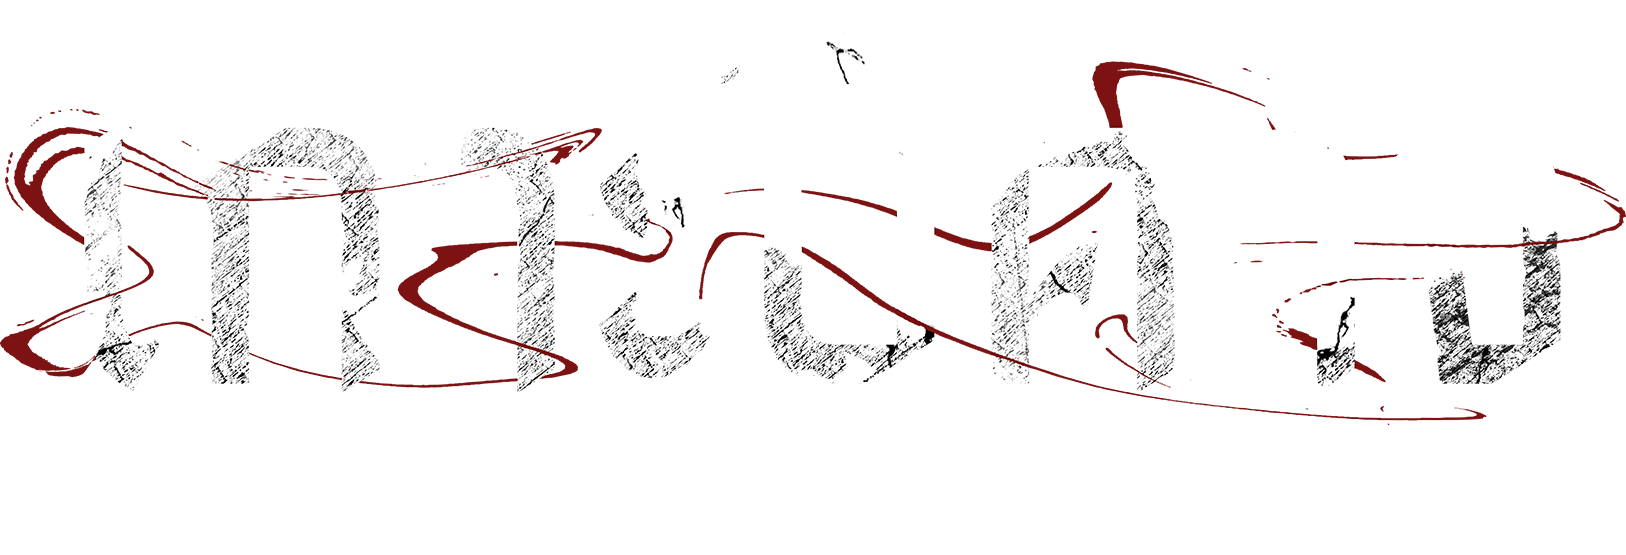 Island เกาะปีศาจ